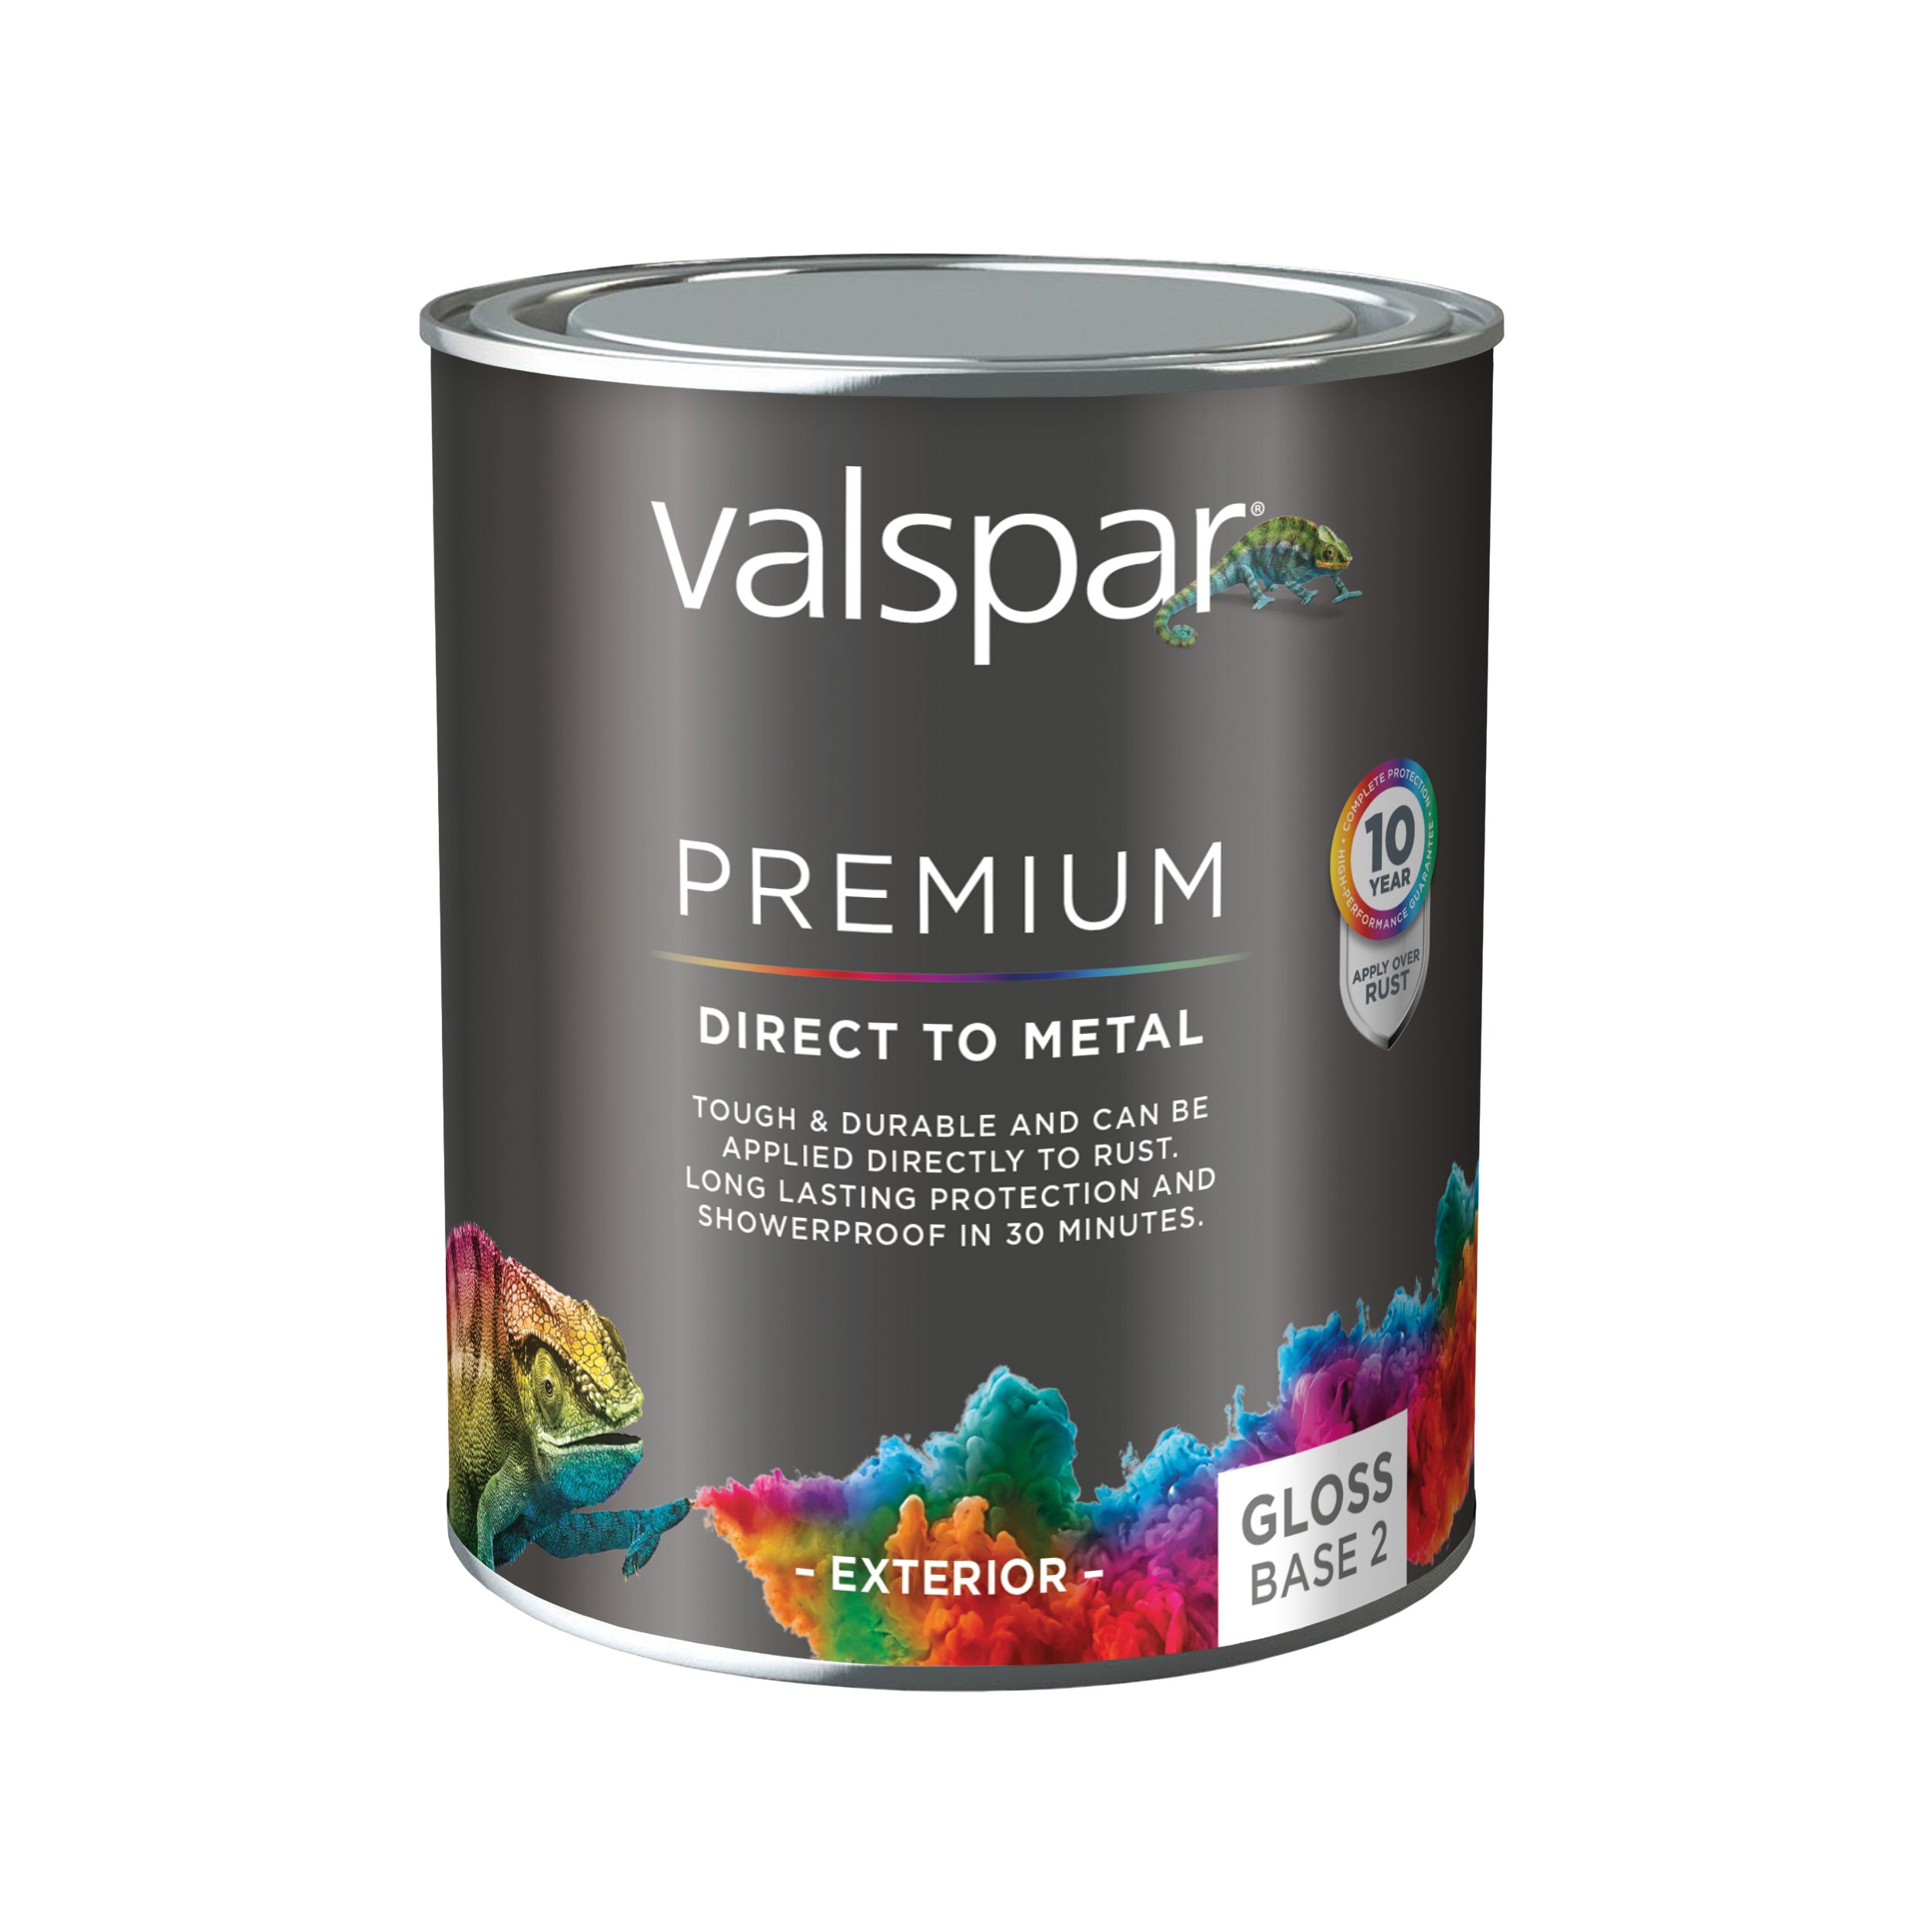 Valspar Premium Direct to Metal Exterior Metal & wood Gloss Basecoat, Mixed, Base B, 750ml